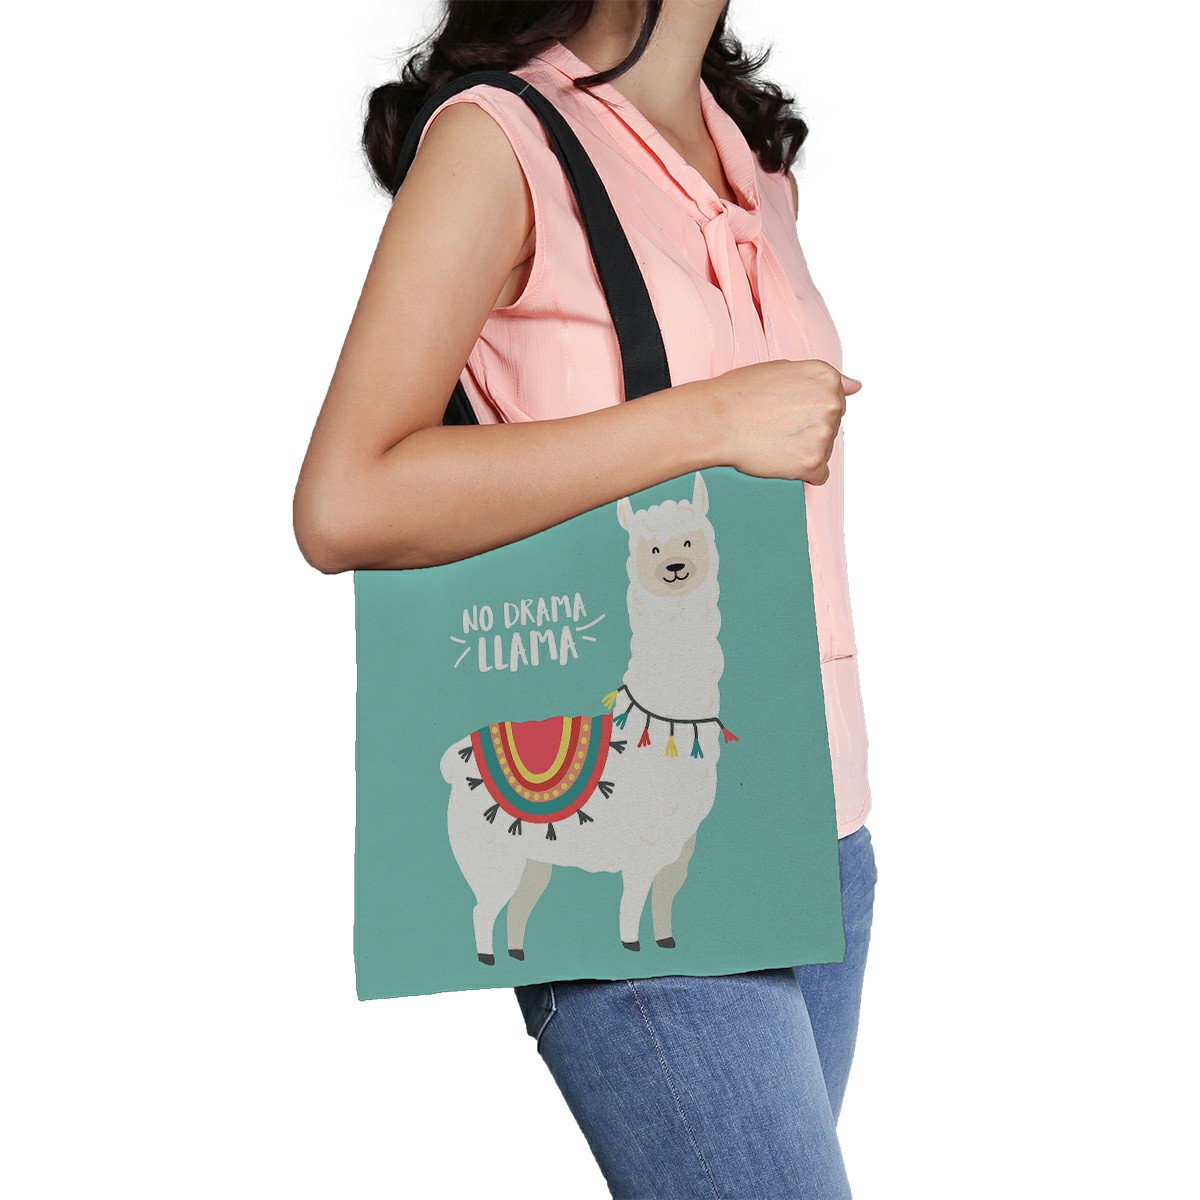 ECZJNT Cute Cartoon Llama Design Canvas Bag Reusable Tote Grocery Shopping Bags Tote Bag 14"(W) x 16"(H) - image 1 of 2